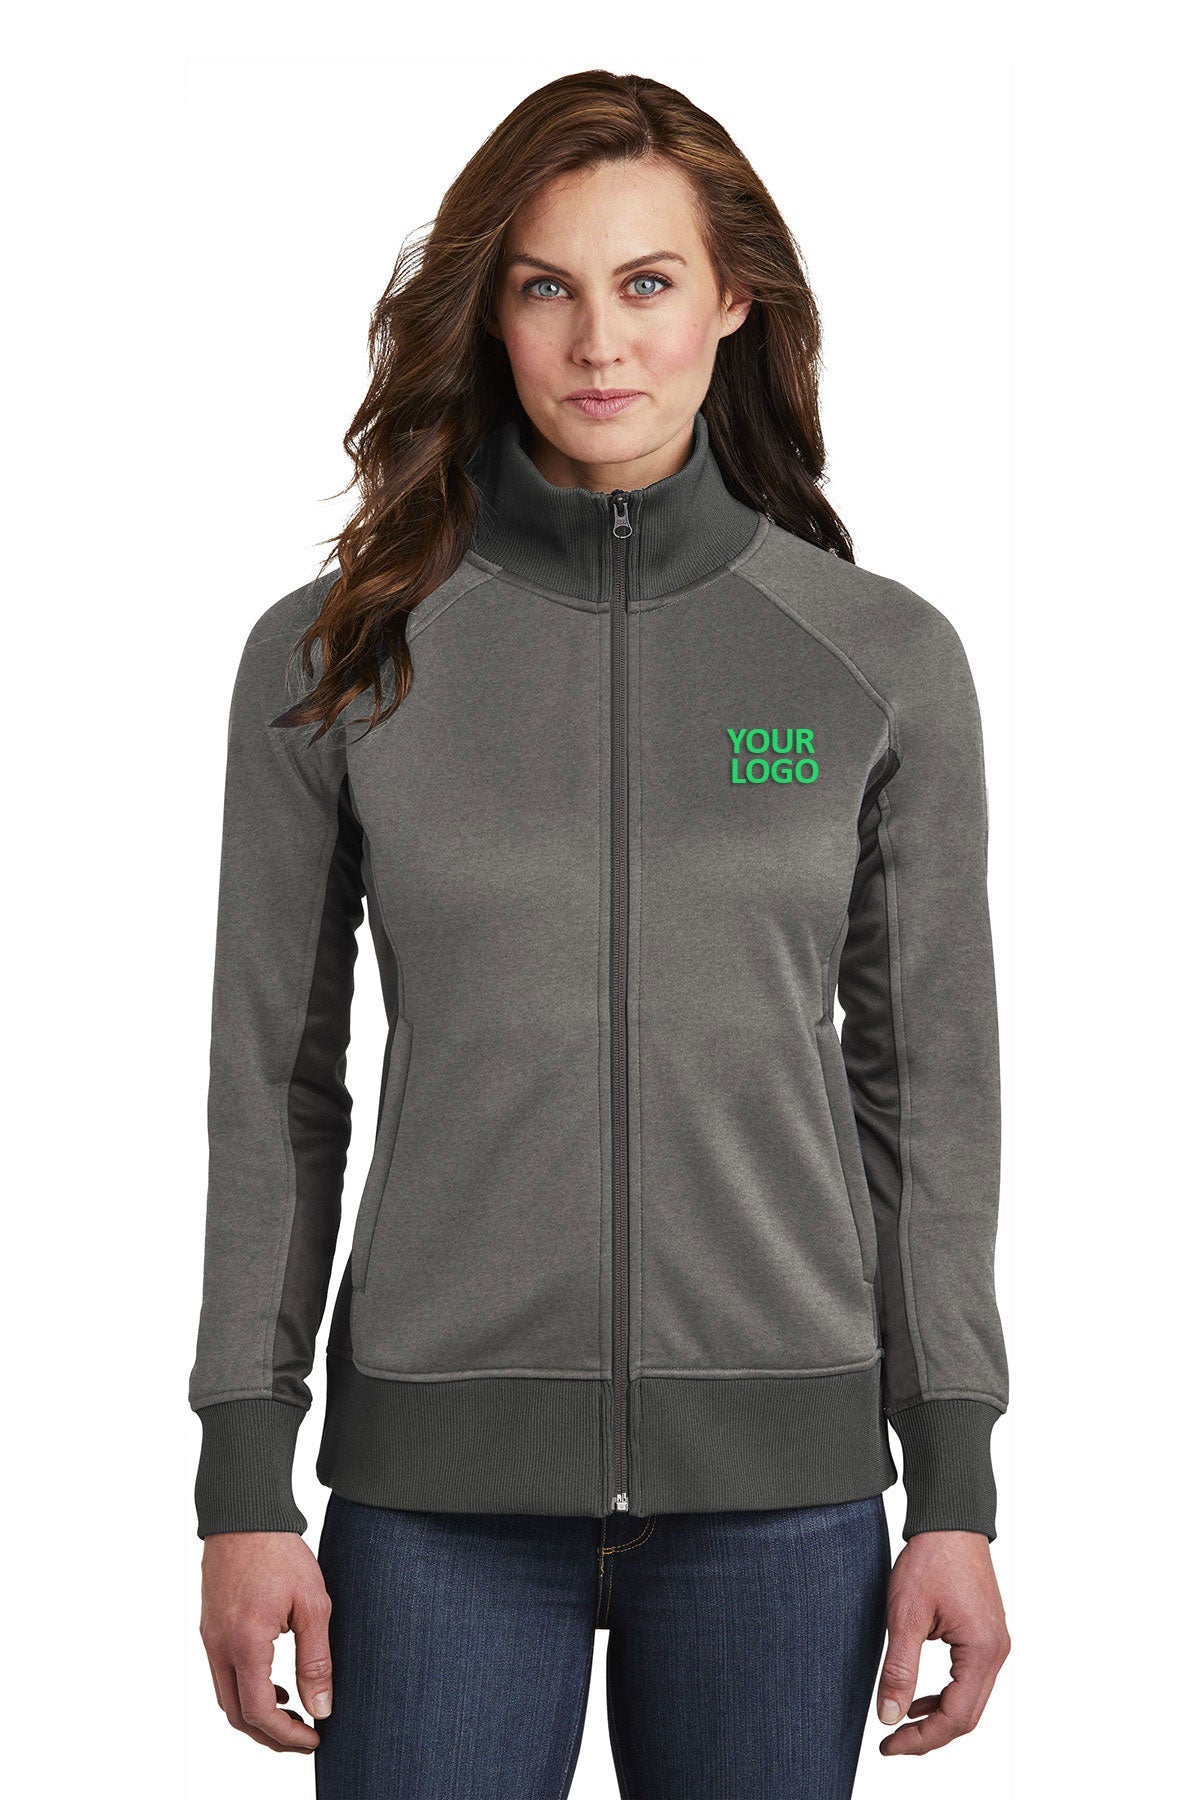 The North Face TNF Medium Grey Heather/ Asphalt NF0A3SEV jackets with company logo